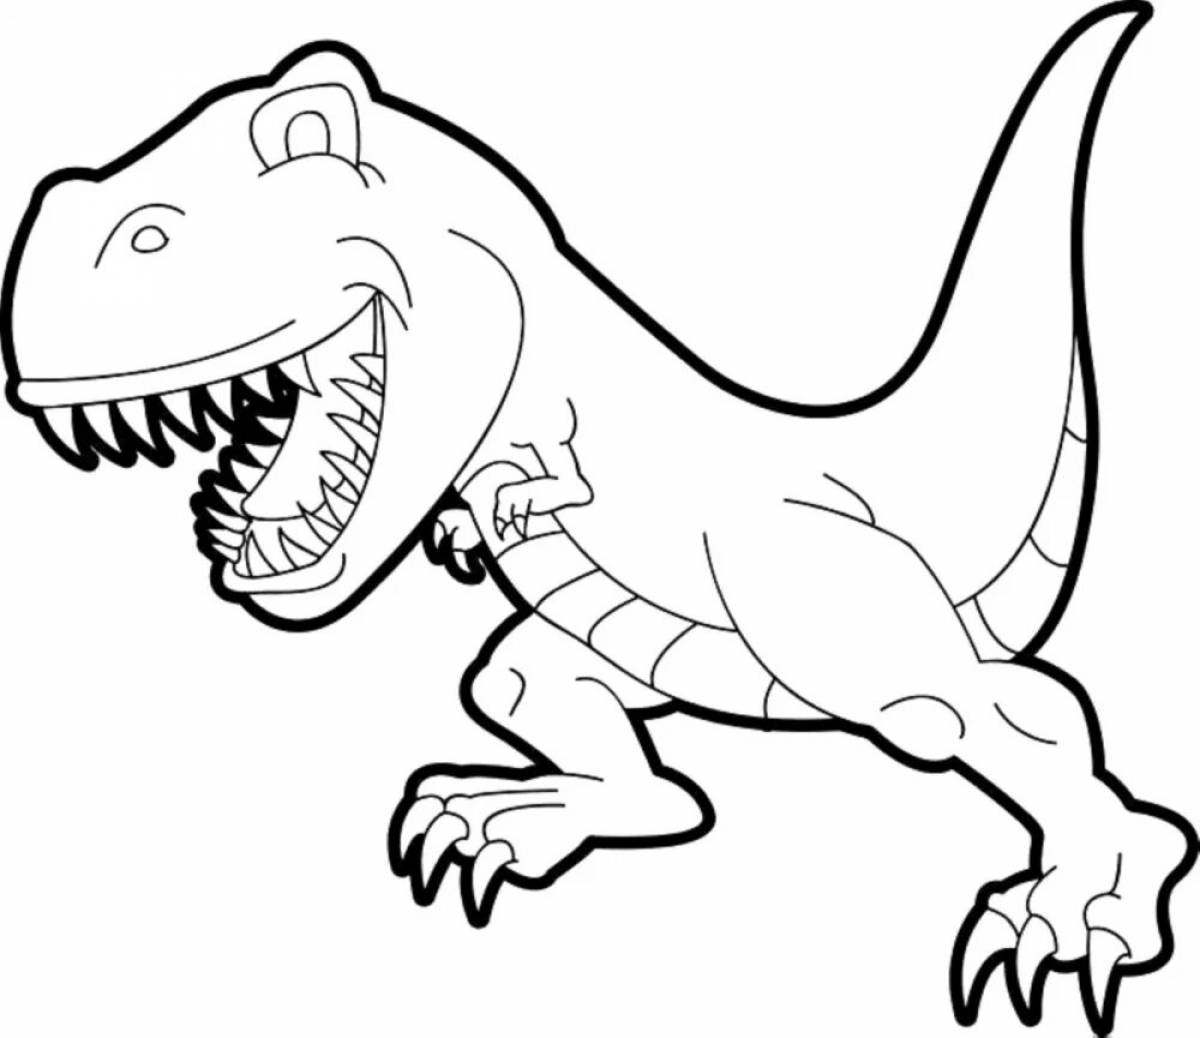 Attractive tyrannosaurus seal coloring page